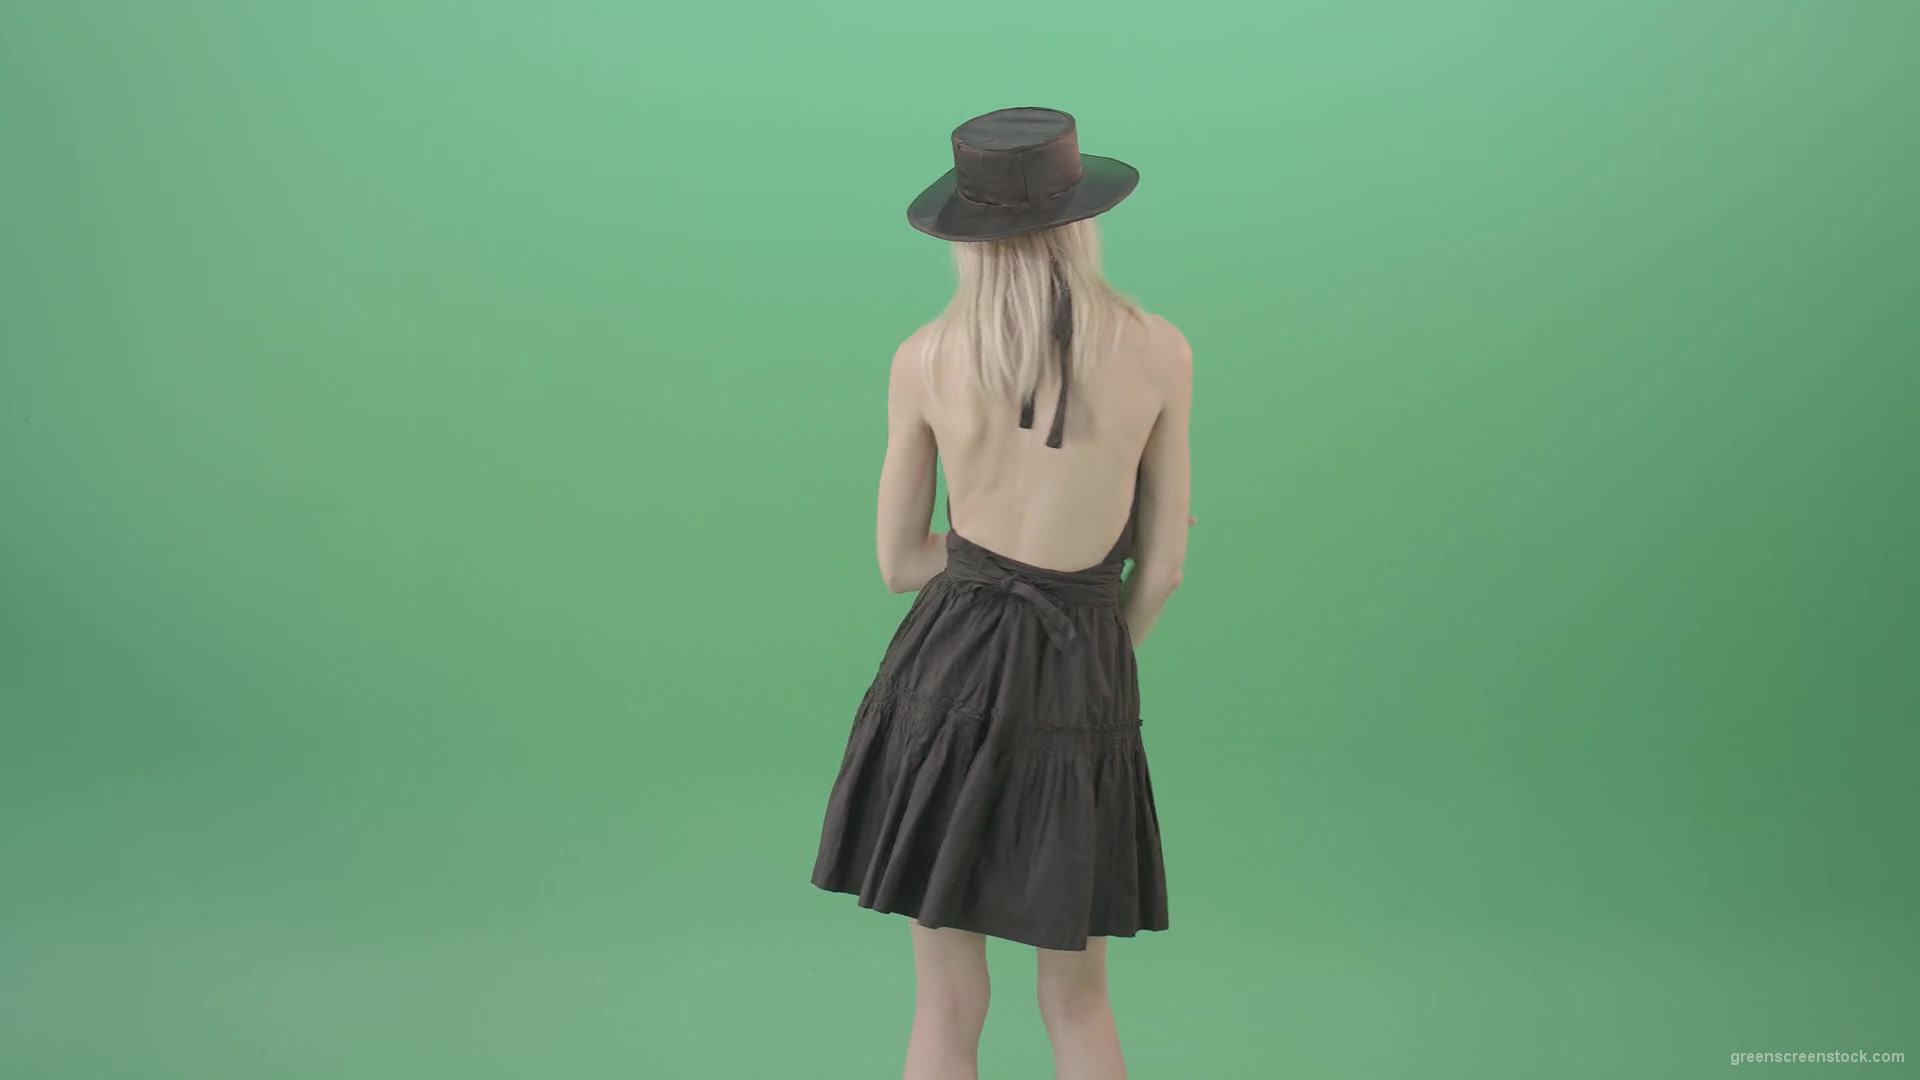 Blonde-girl-in-black-hat-with-open-back-posing-in-dark-dress-over-green-screen-4K-Video-Footage-1920_005 Green Screen Stock